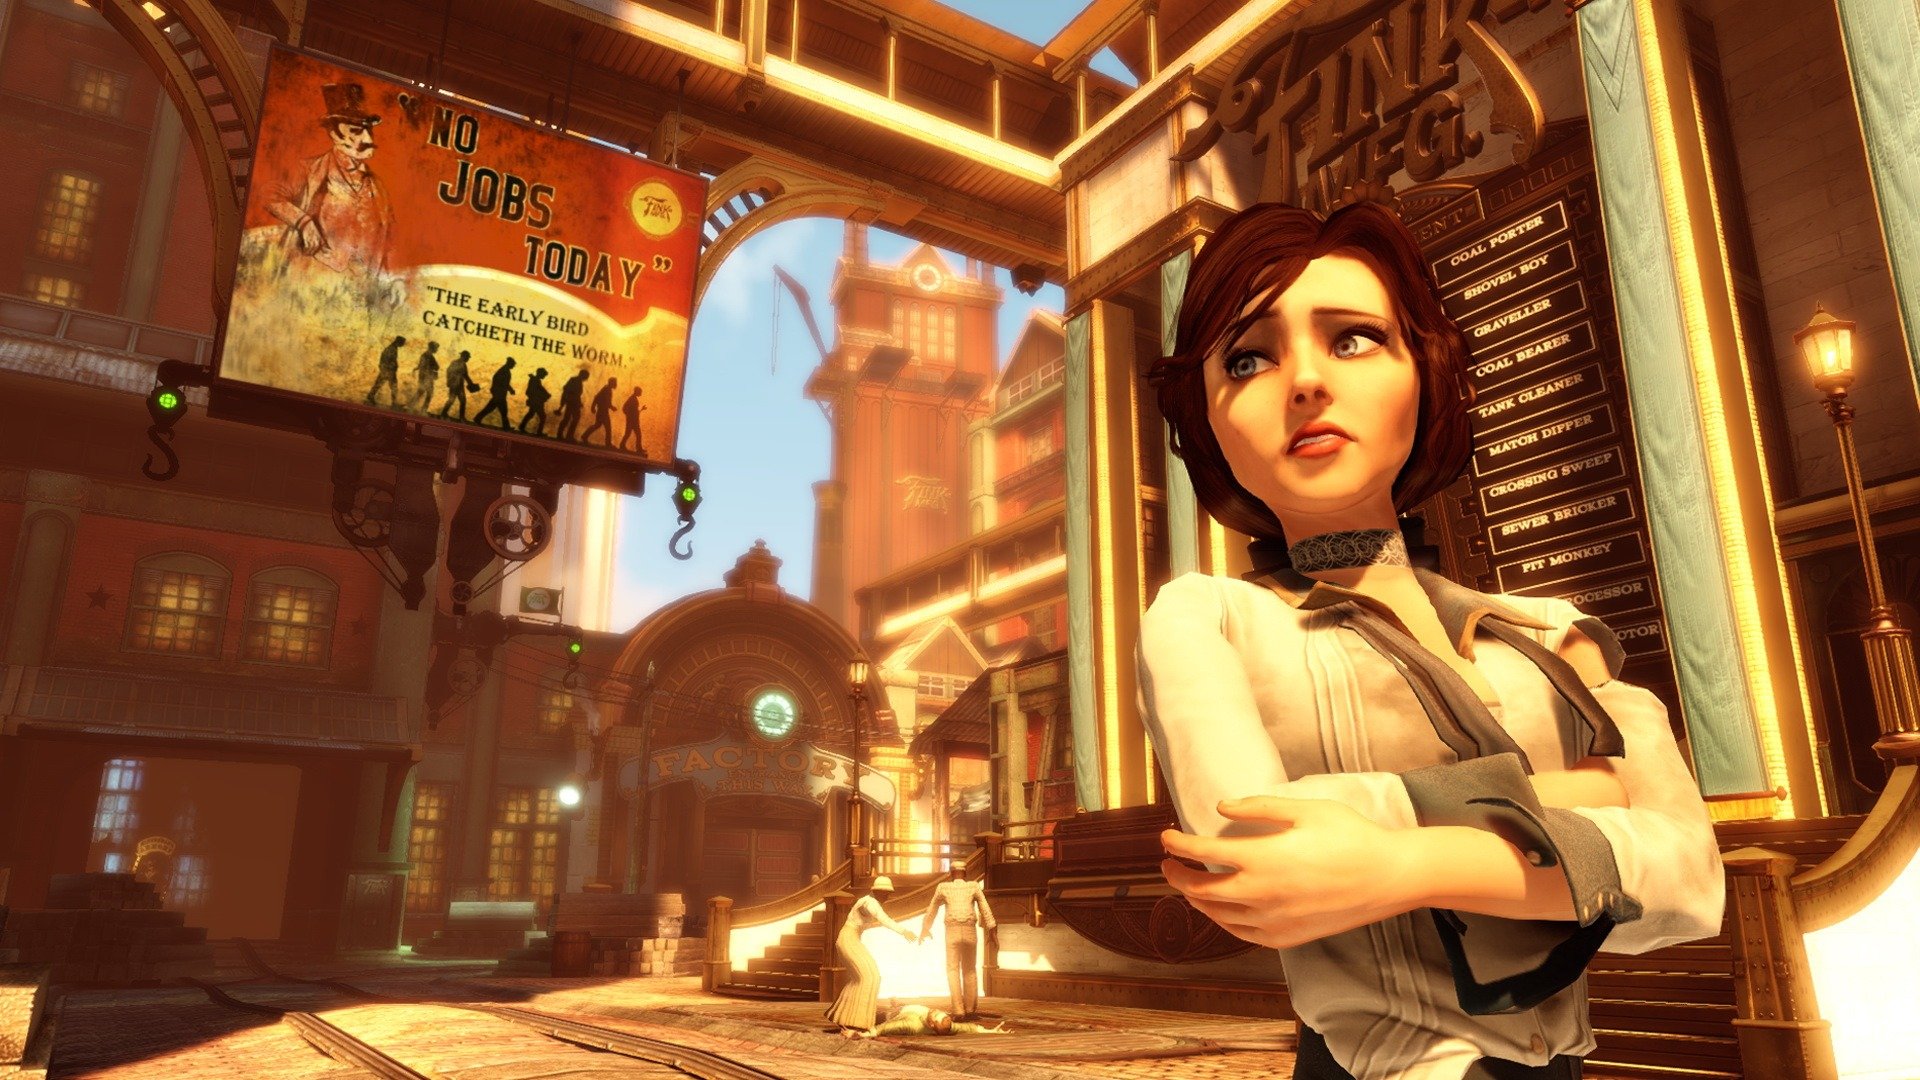 Report: BioShock director's new game facing troubled development, End Game Boss, endgameboss.com